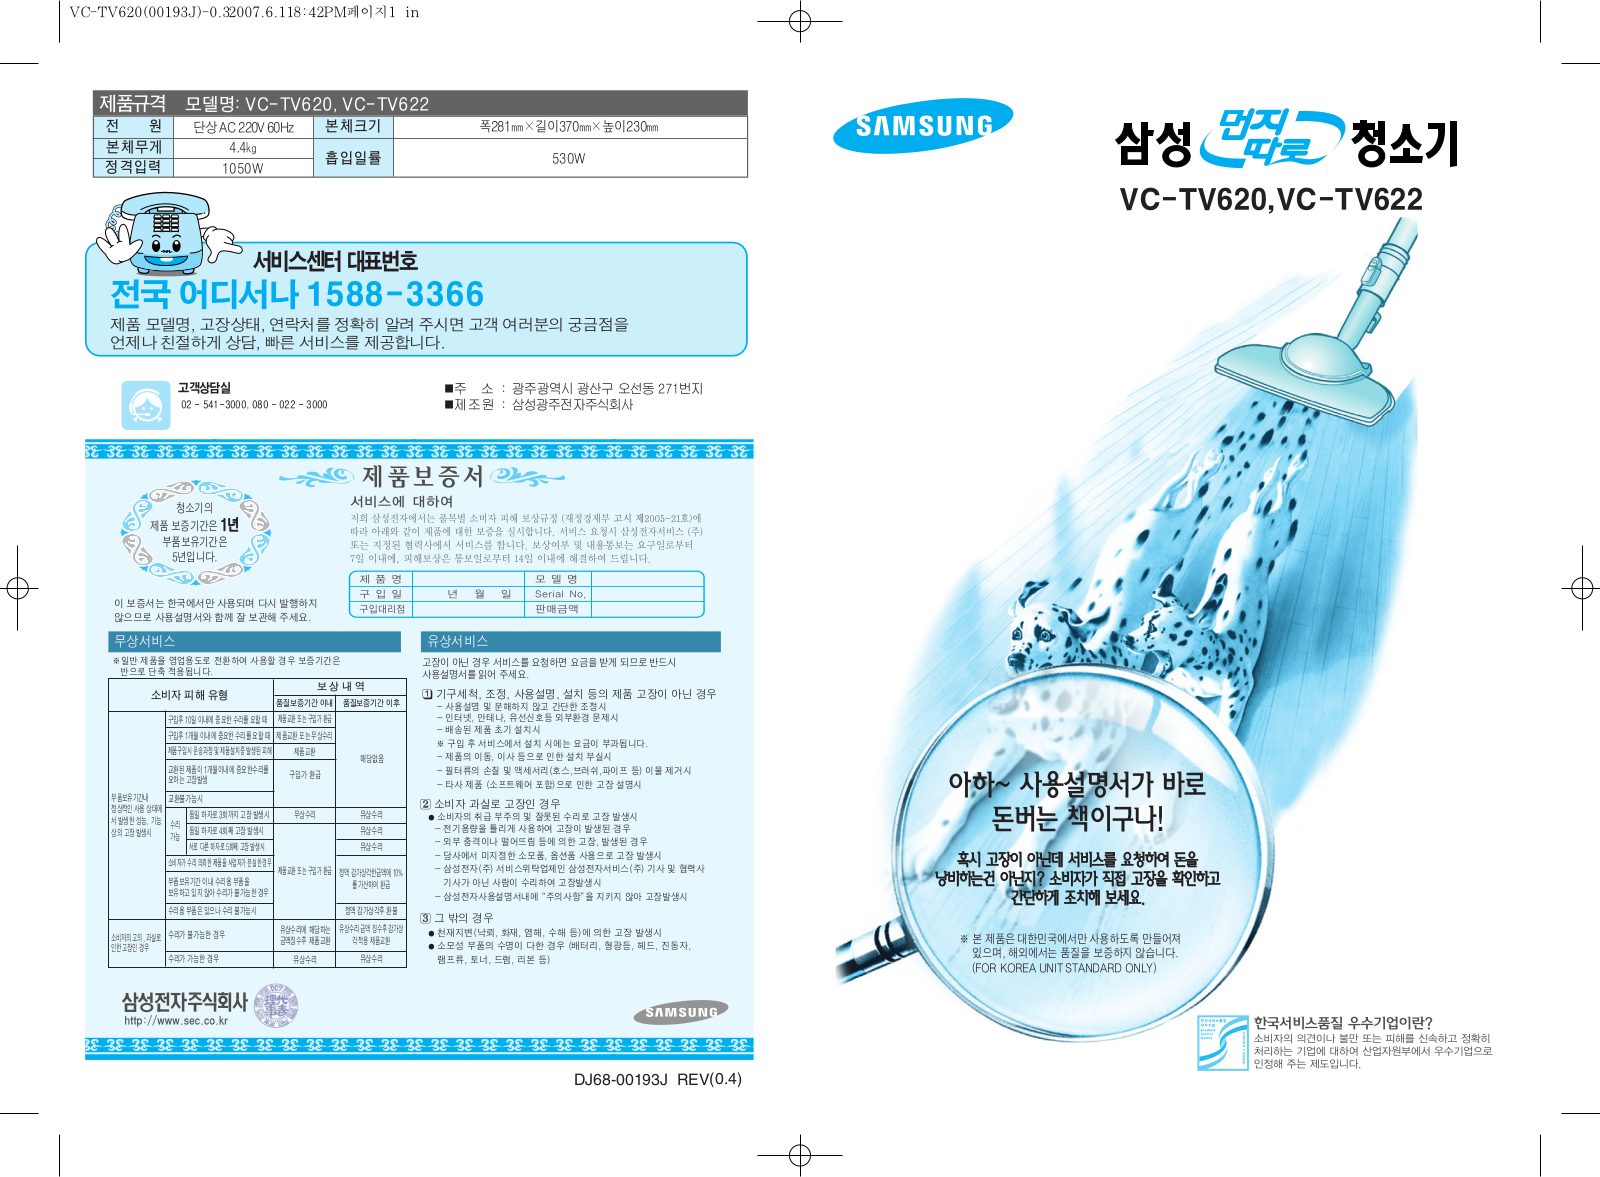 Samsung VC-TV622, VC-TV620 User Manual